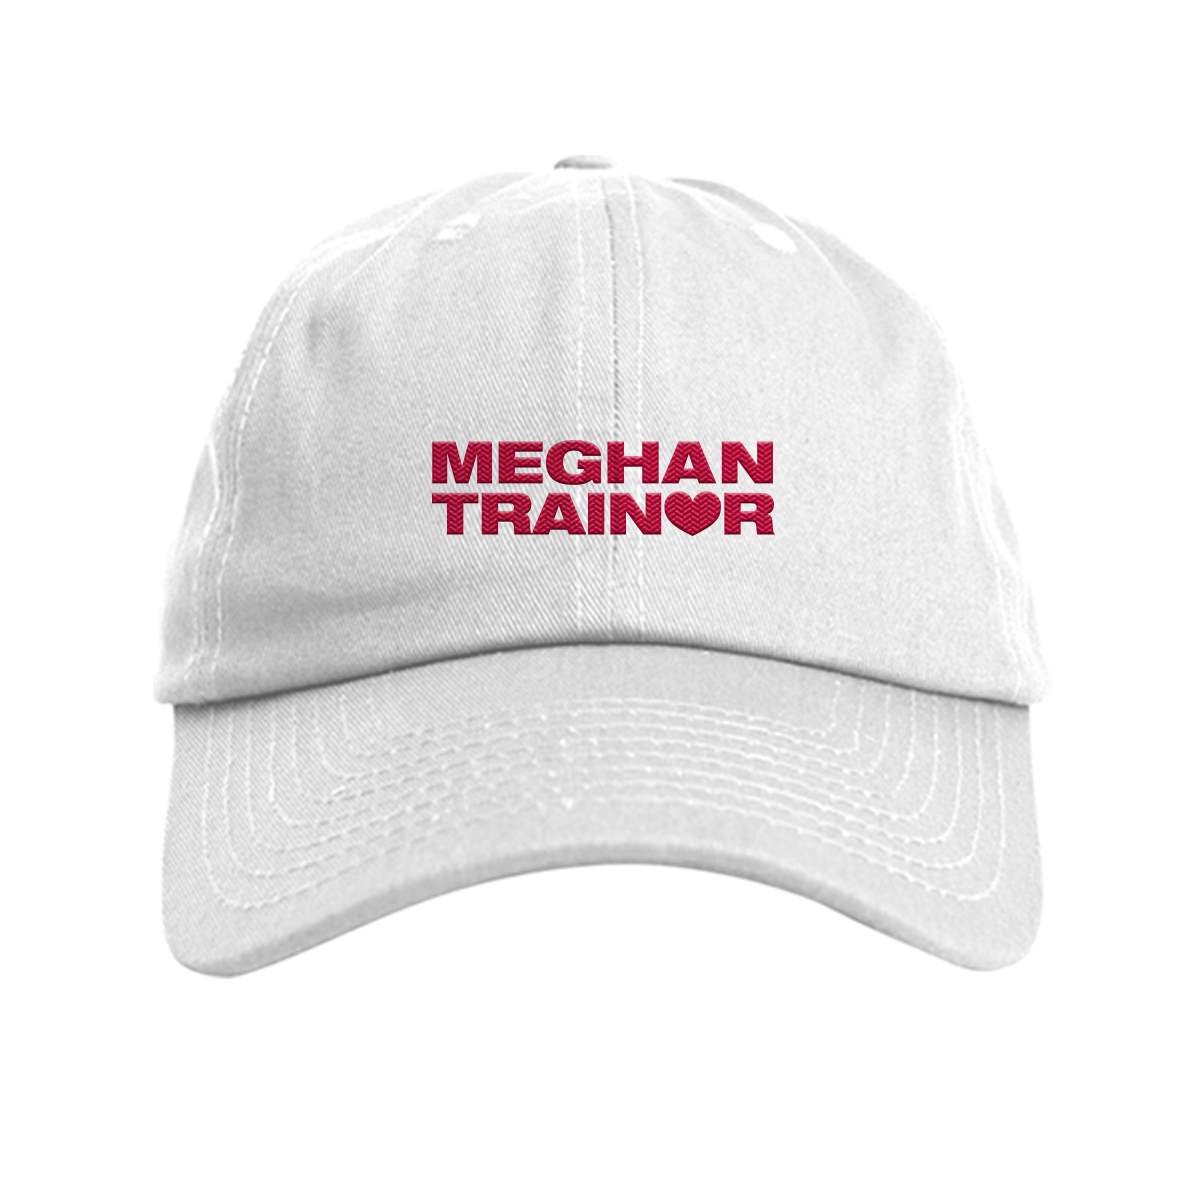 meghan trainor hats